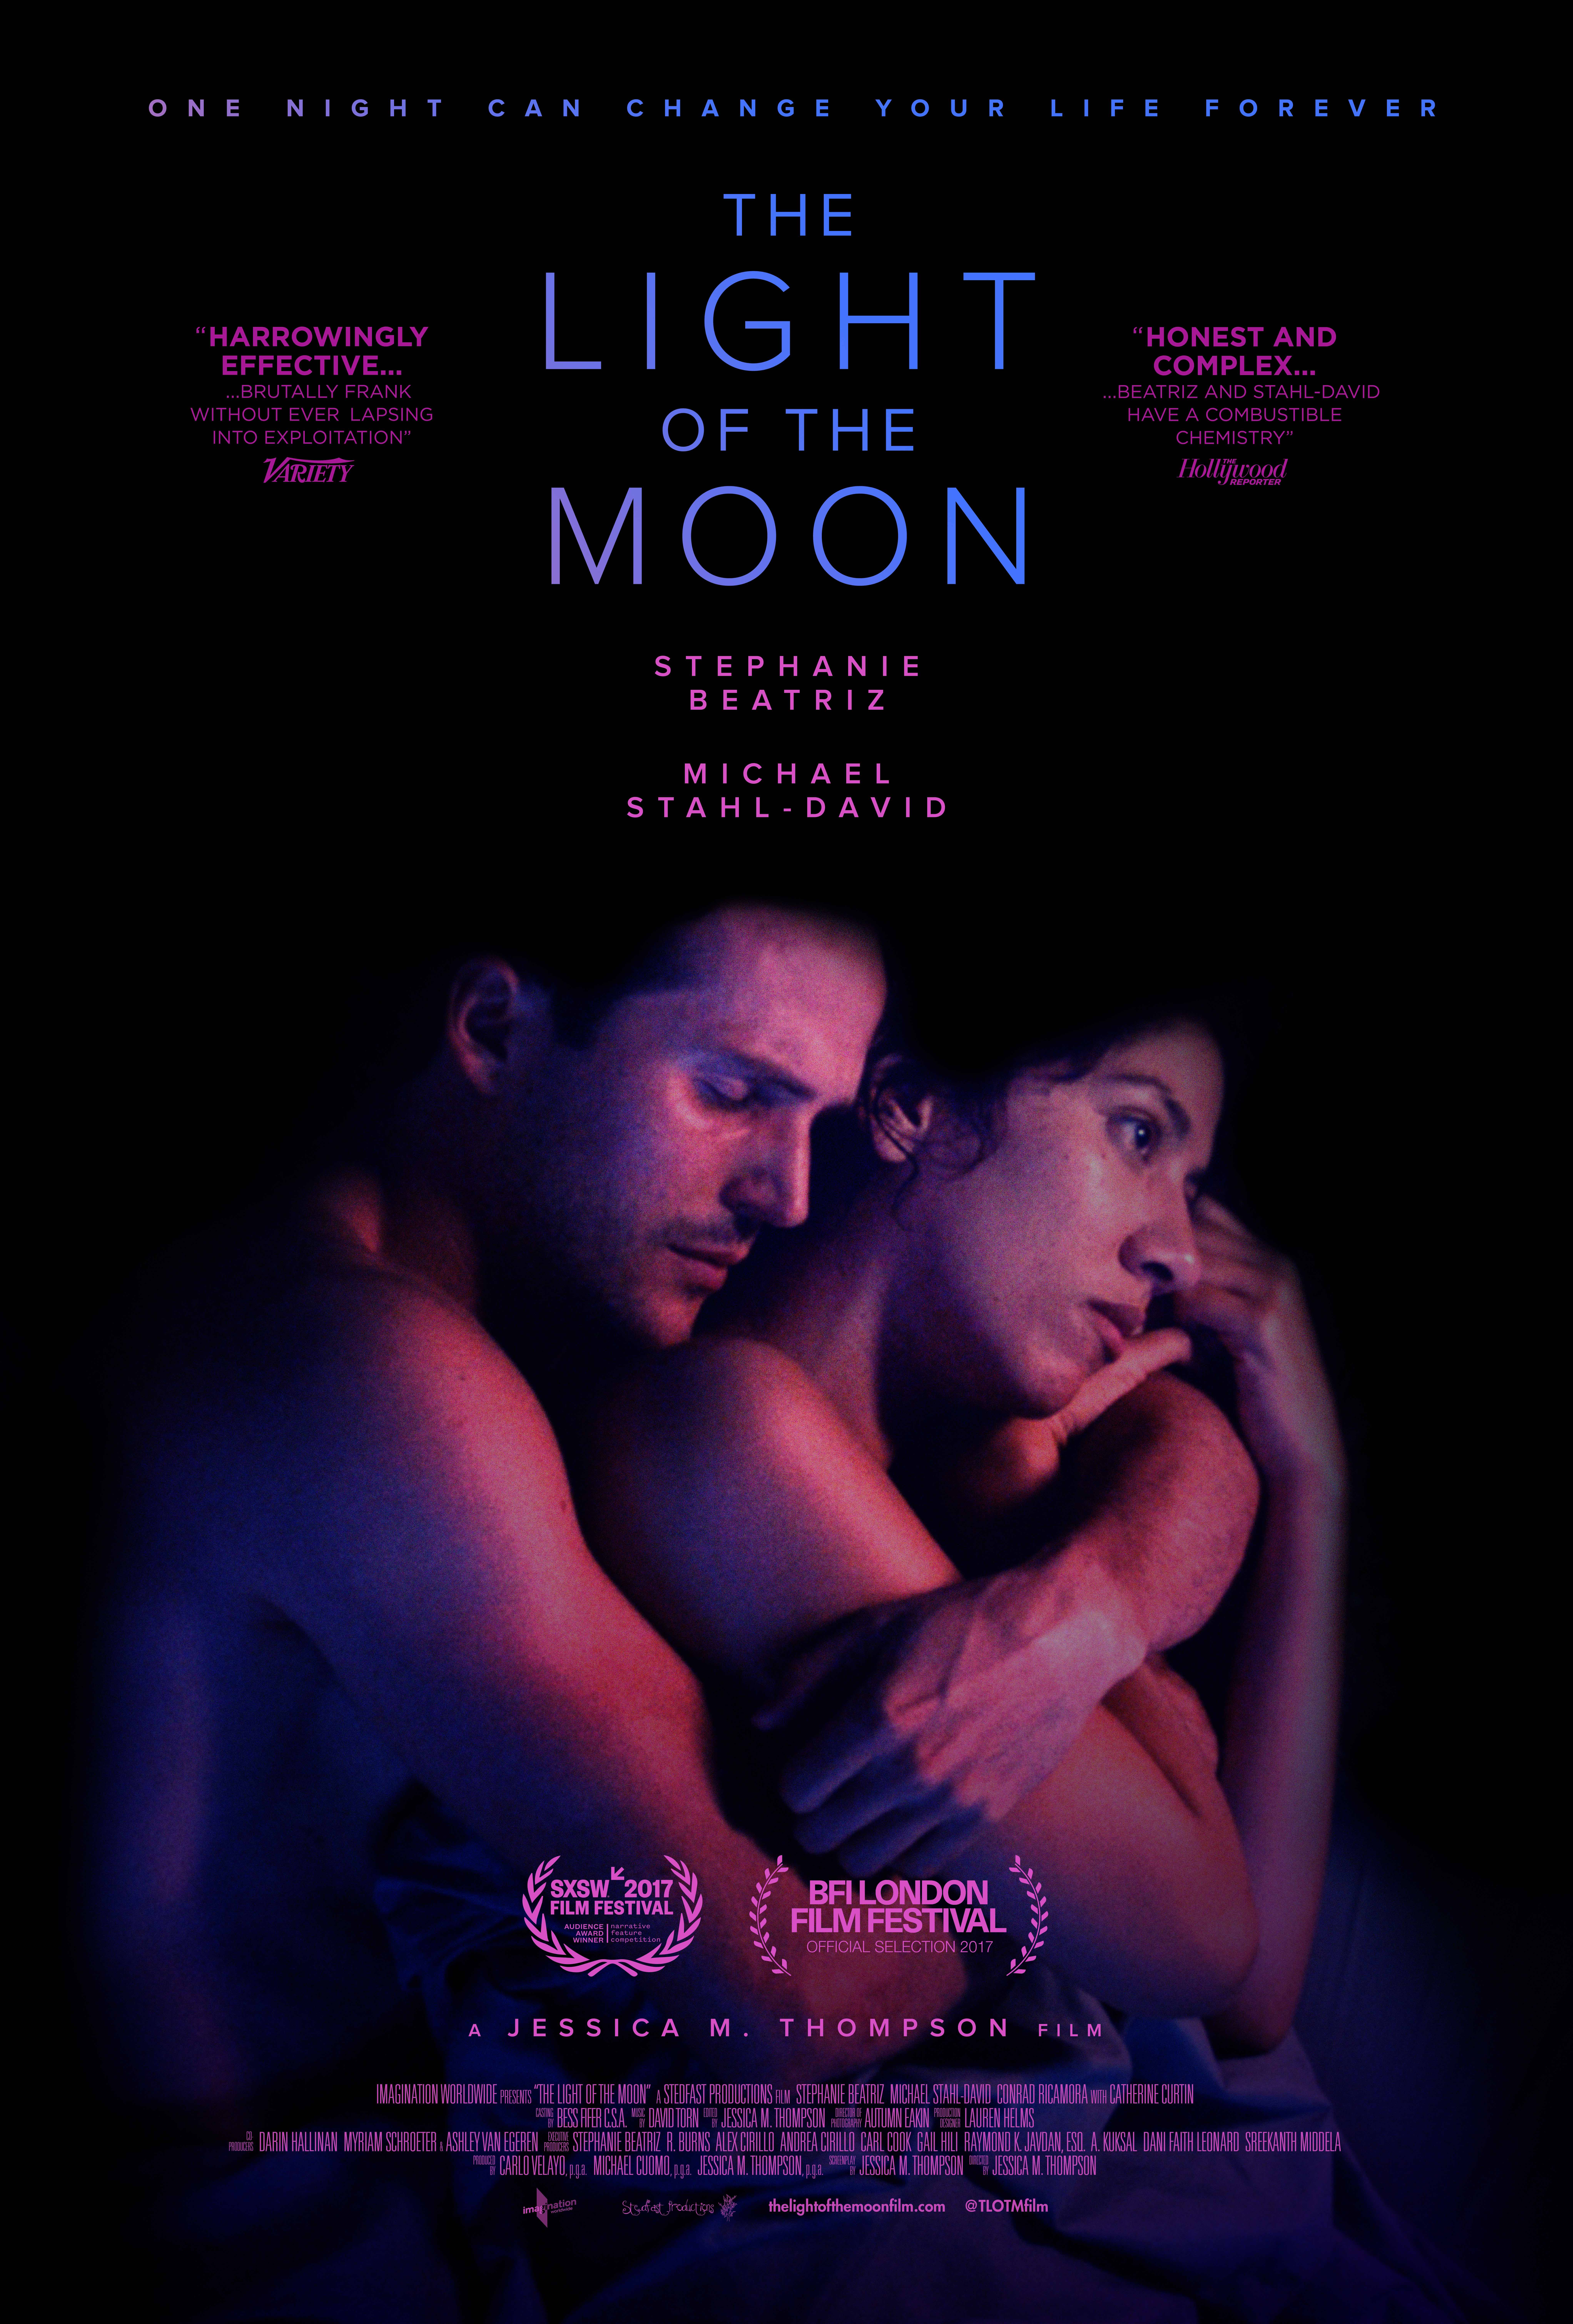 Nonton film The Light of the Moon layarkaca21 indoxx1 ganool online streaming terbaru